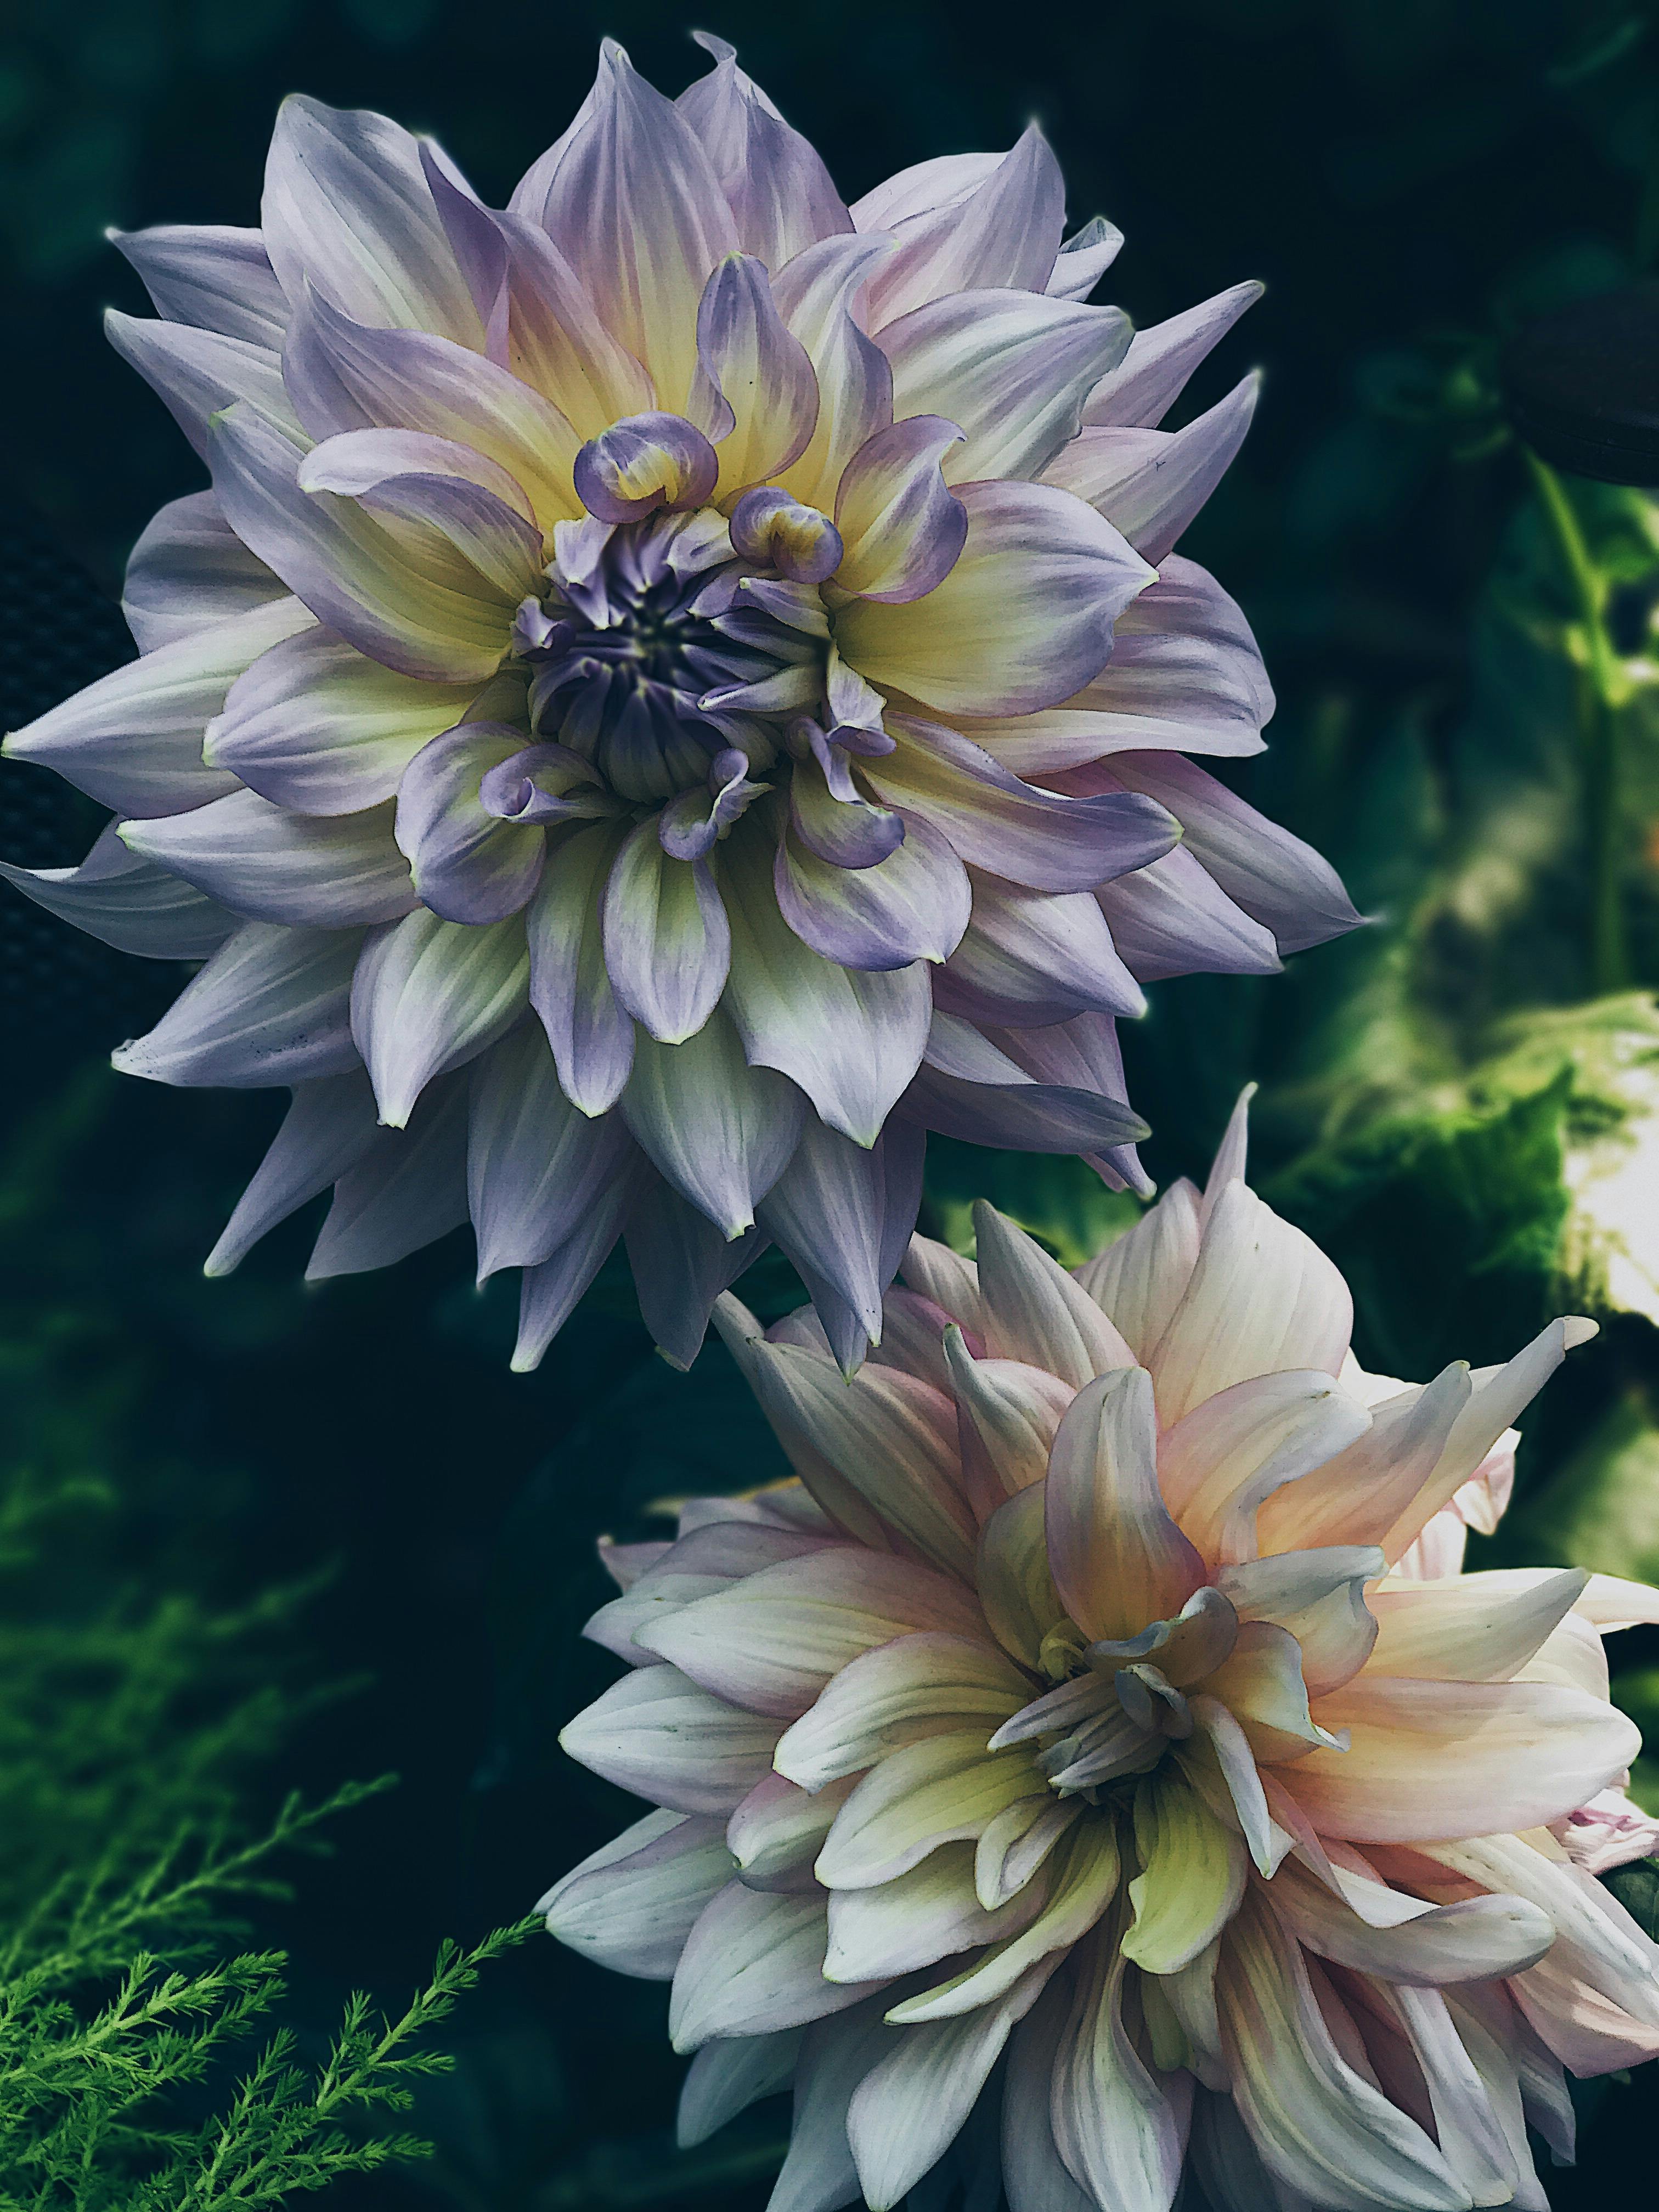 Dahlia Flowers · Free Stock Photo